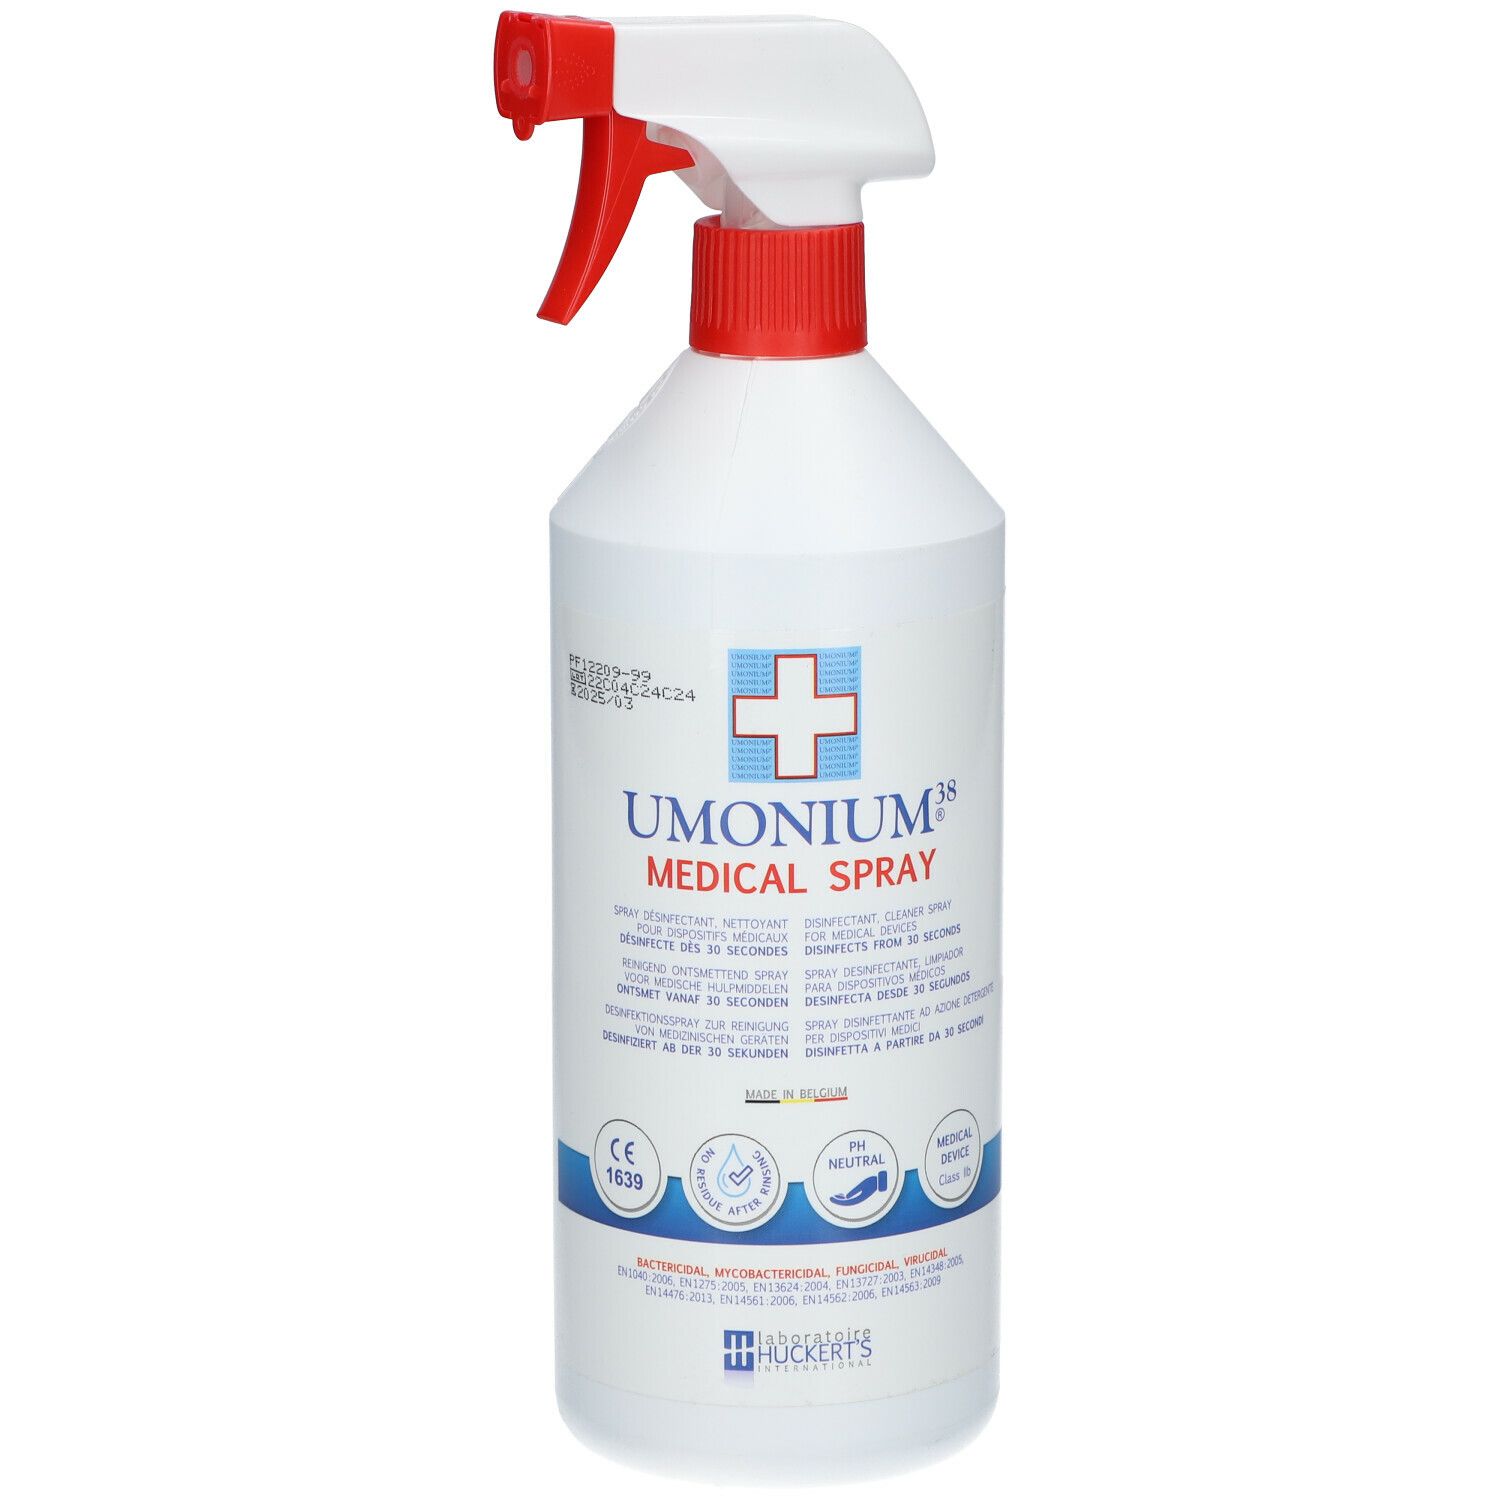 Umonium38® Medical Spray